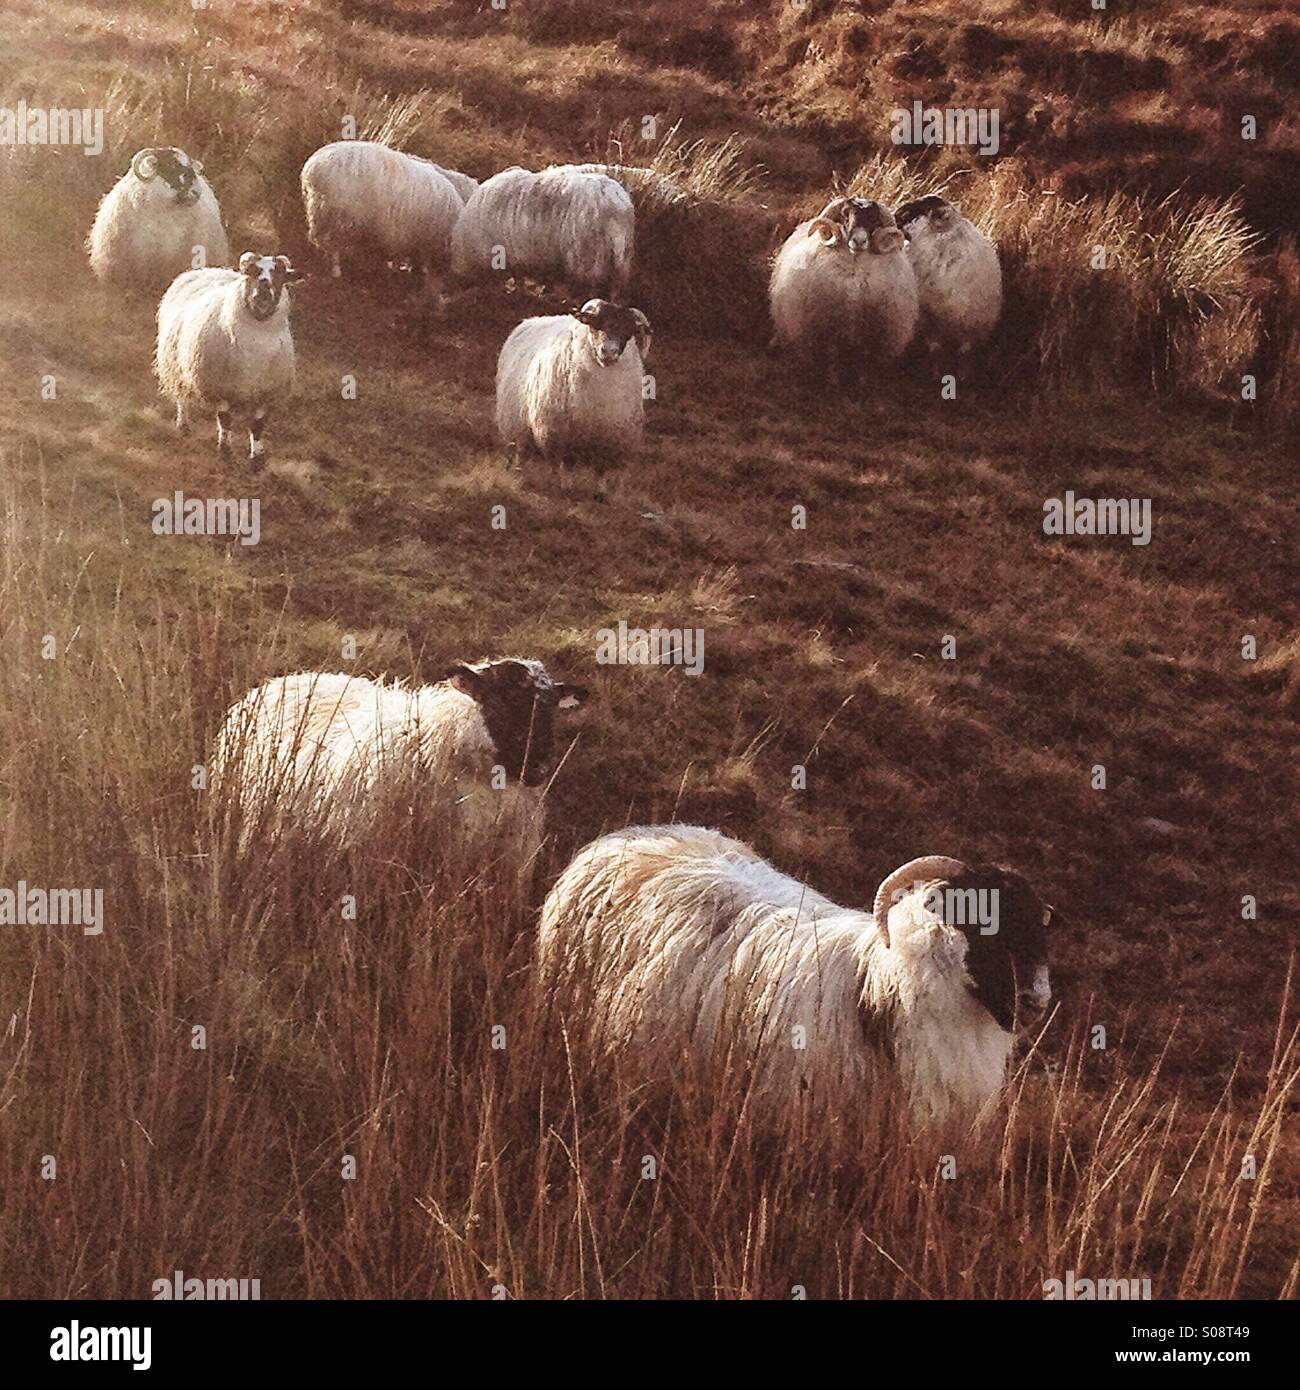 Sheep on a hillside Stock Photo